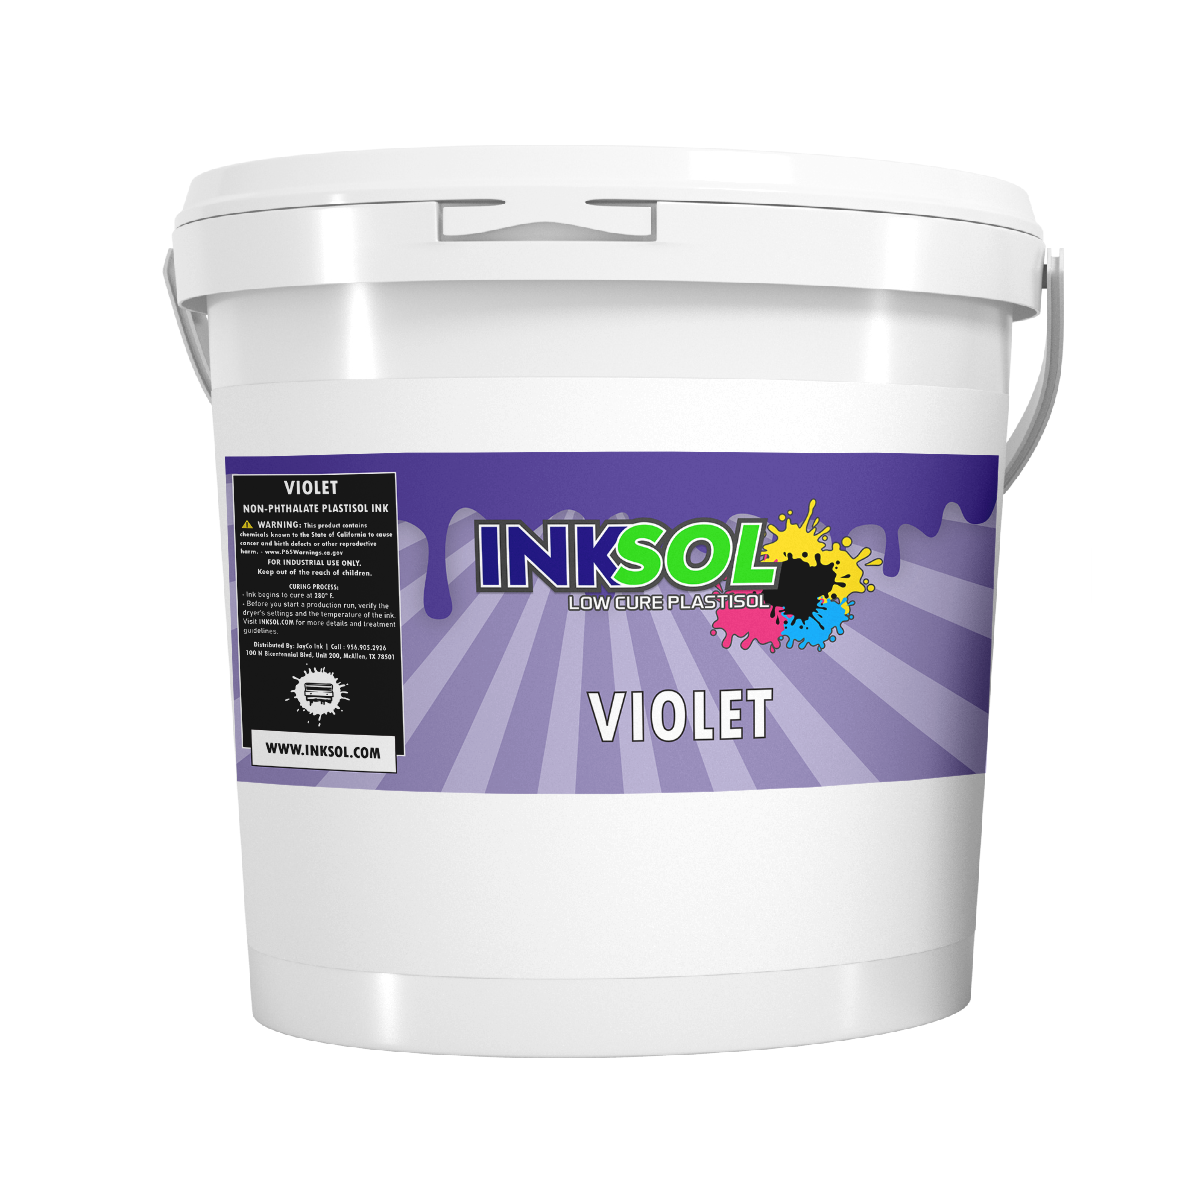 InkSol™ Low Cure Plastisol Violet